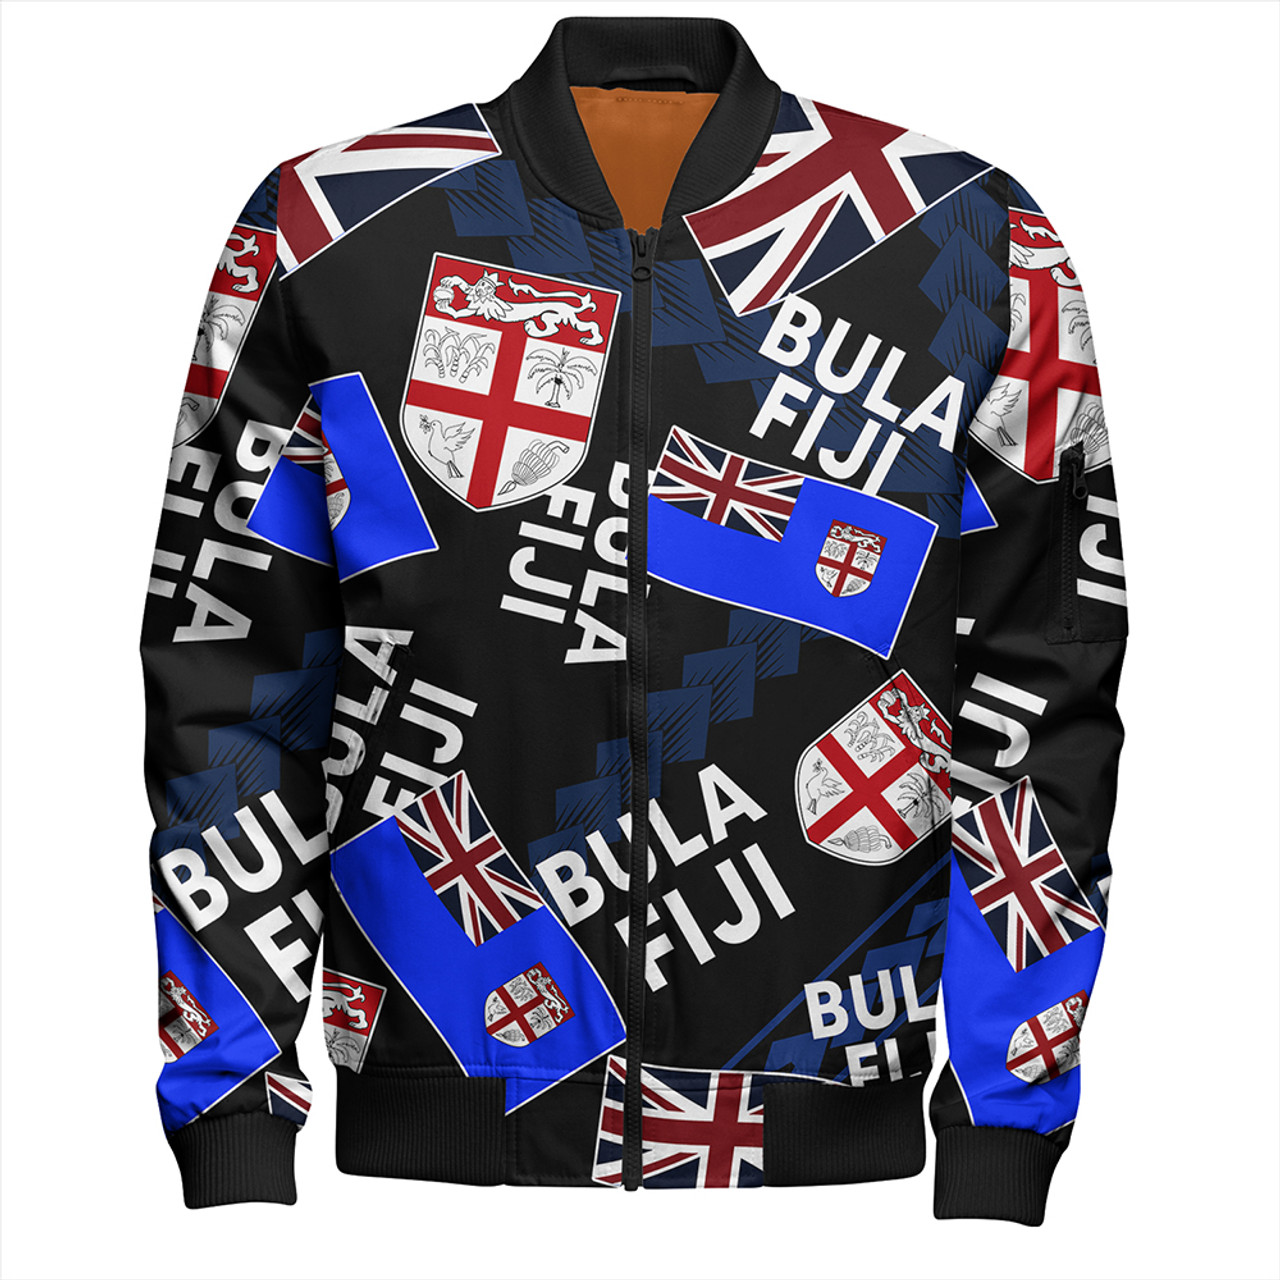 Fiji Bomber Jacket Flag Outfit Free Style